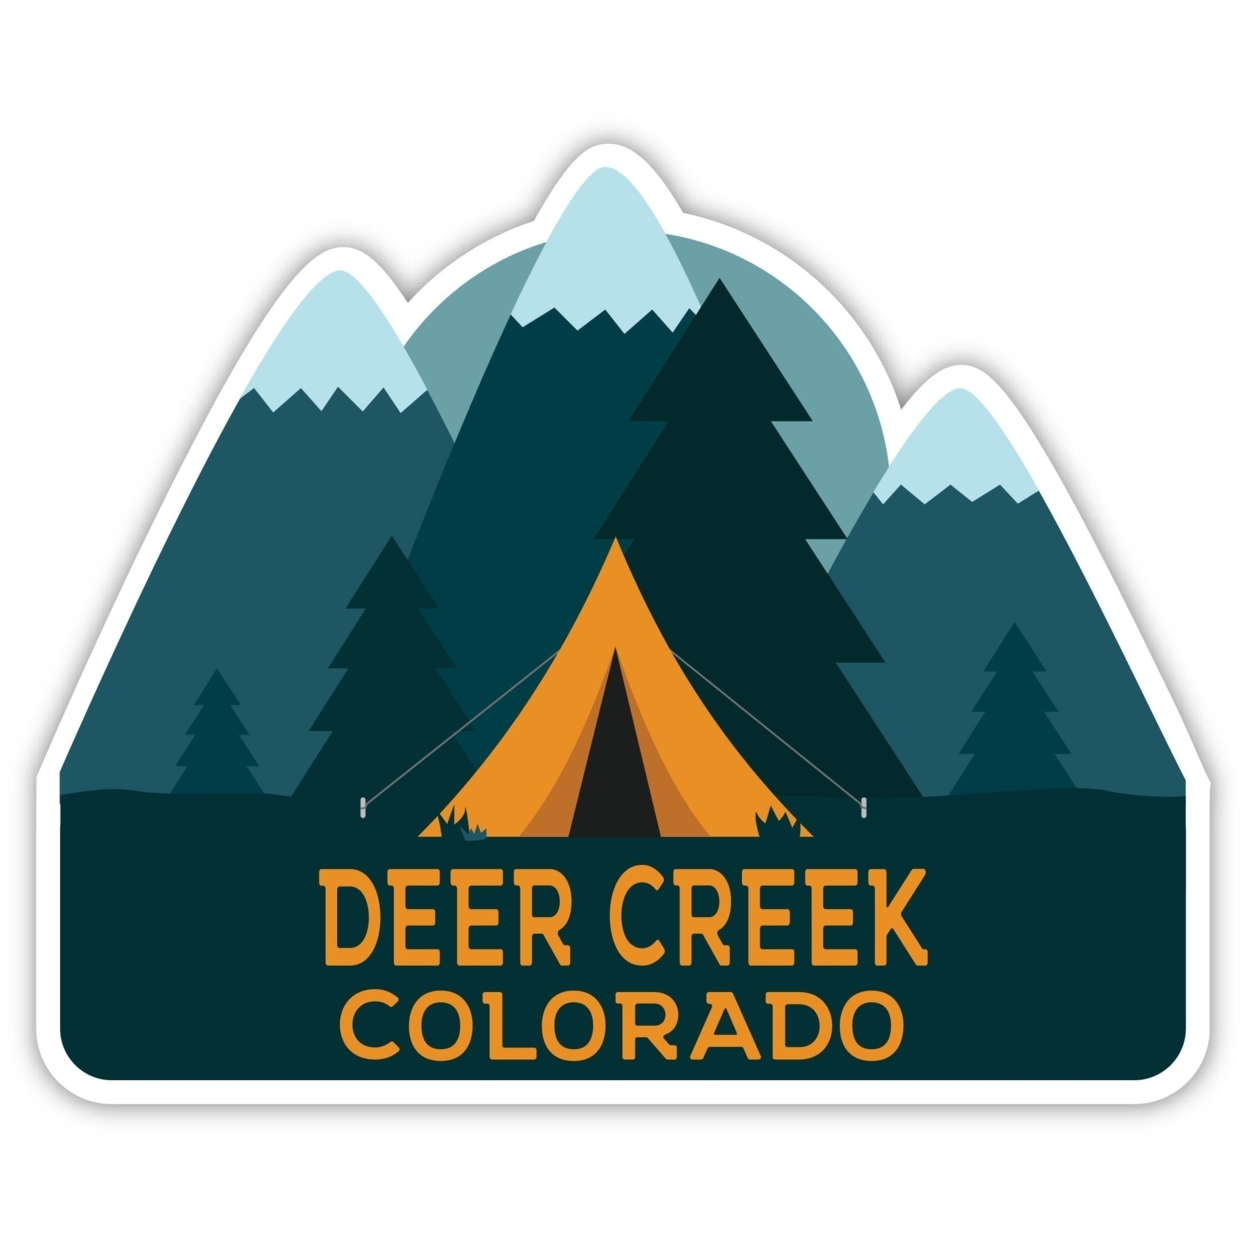 Deer Creek Colorado Souvenir Decorative Stickers (Choose Theme And Size) - 4-Pack, 4-Inch, Tent